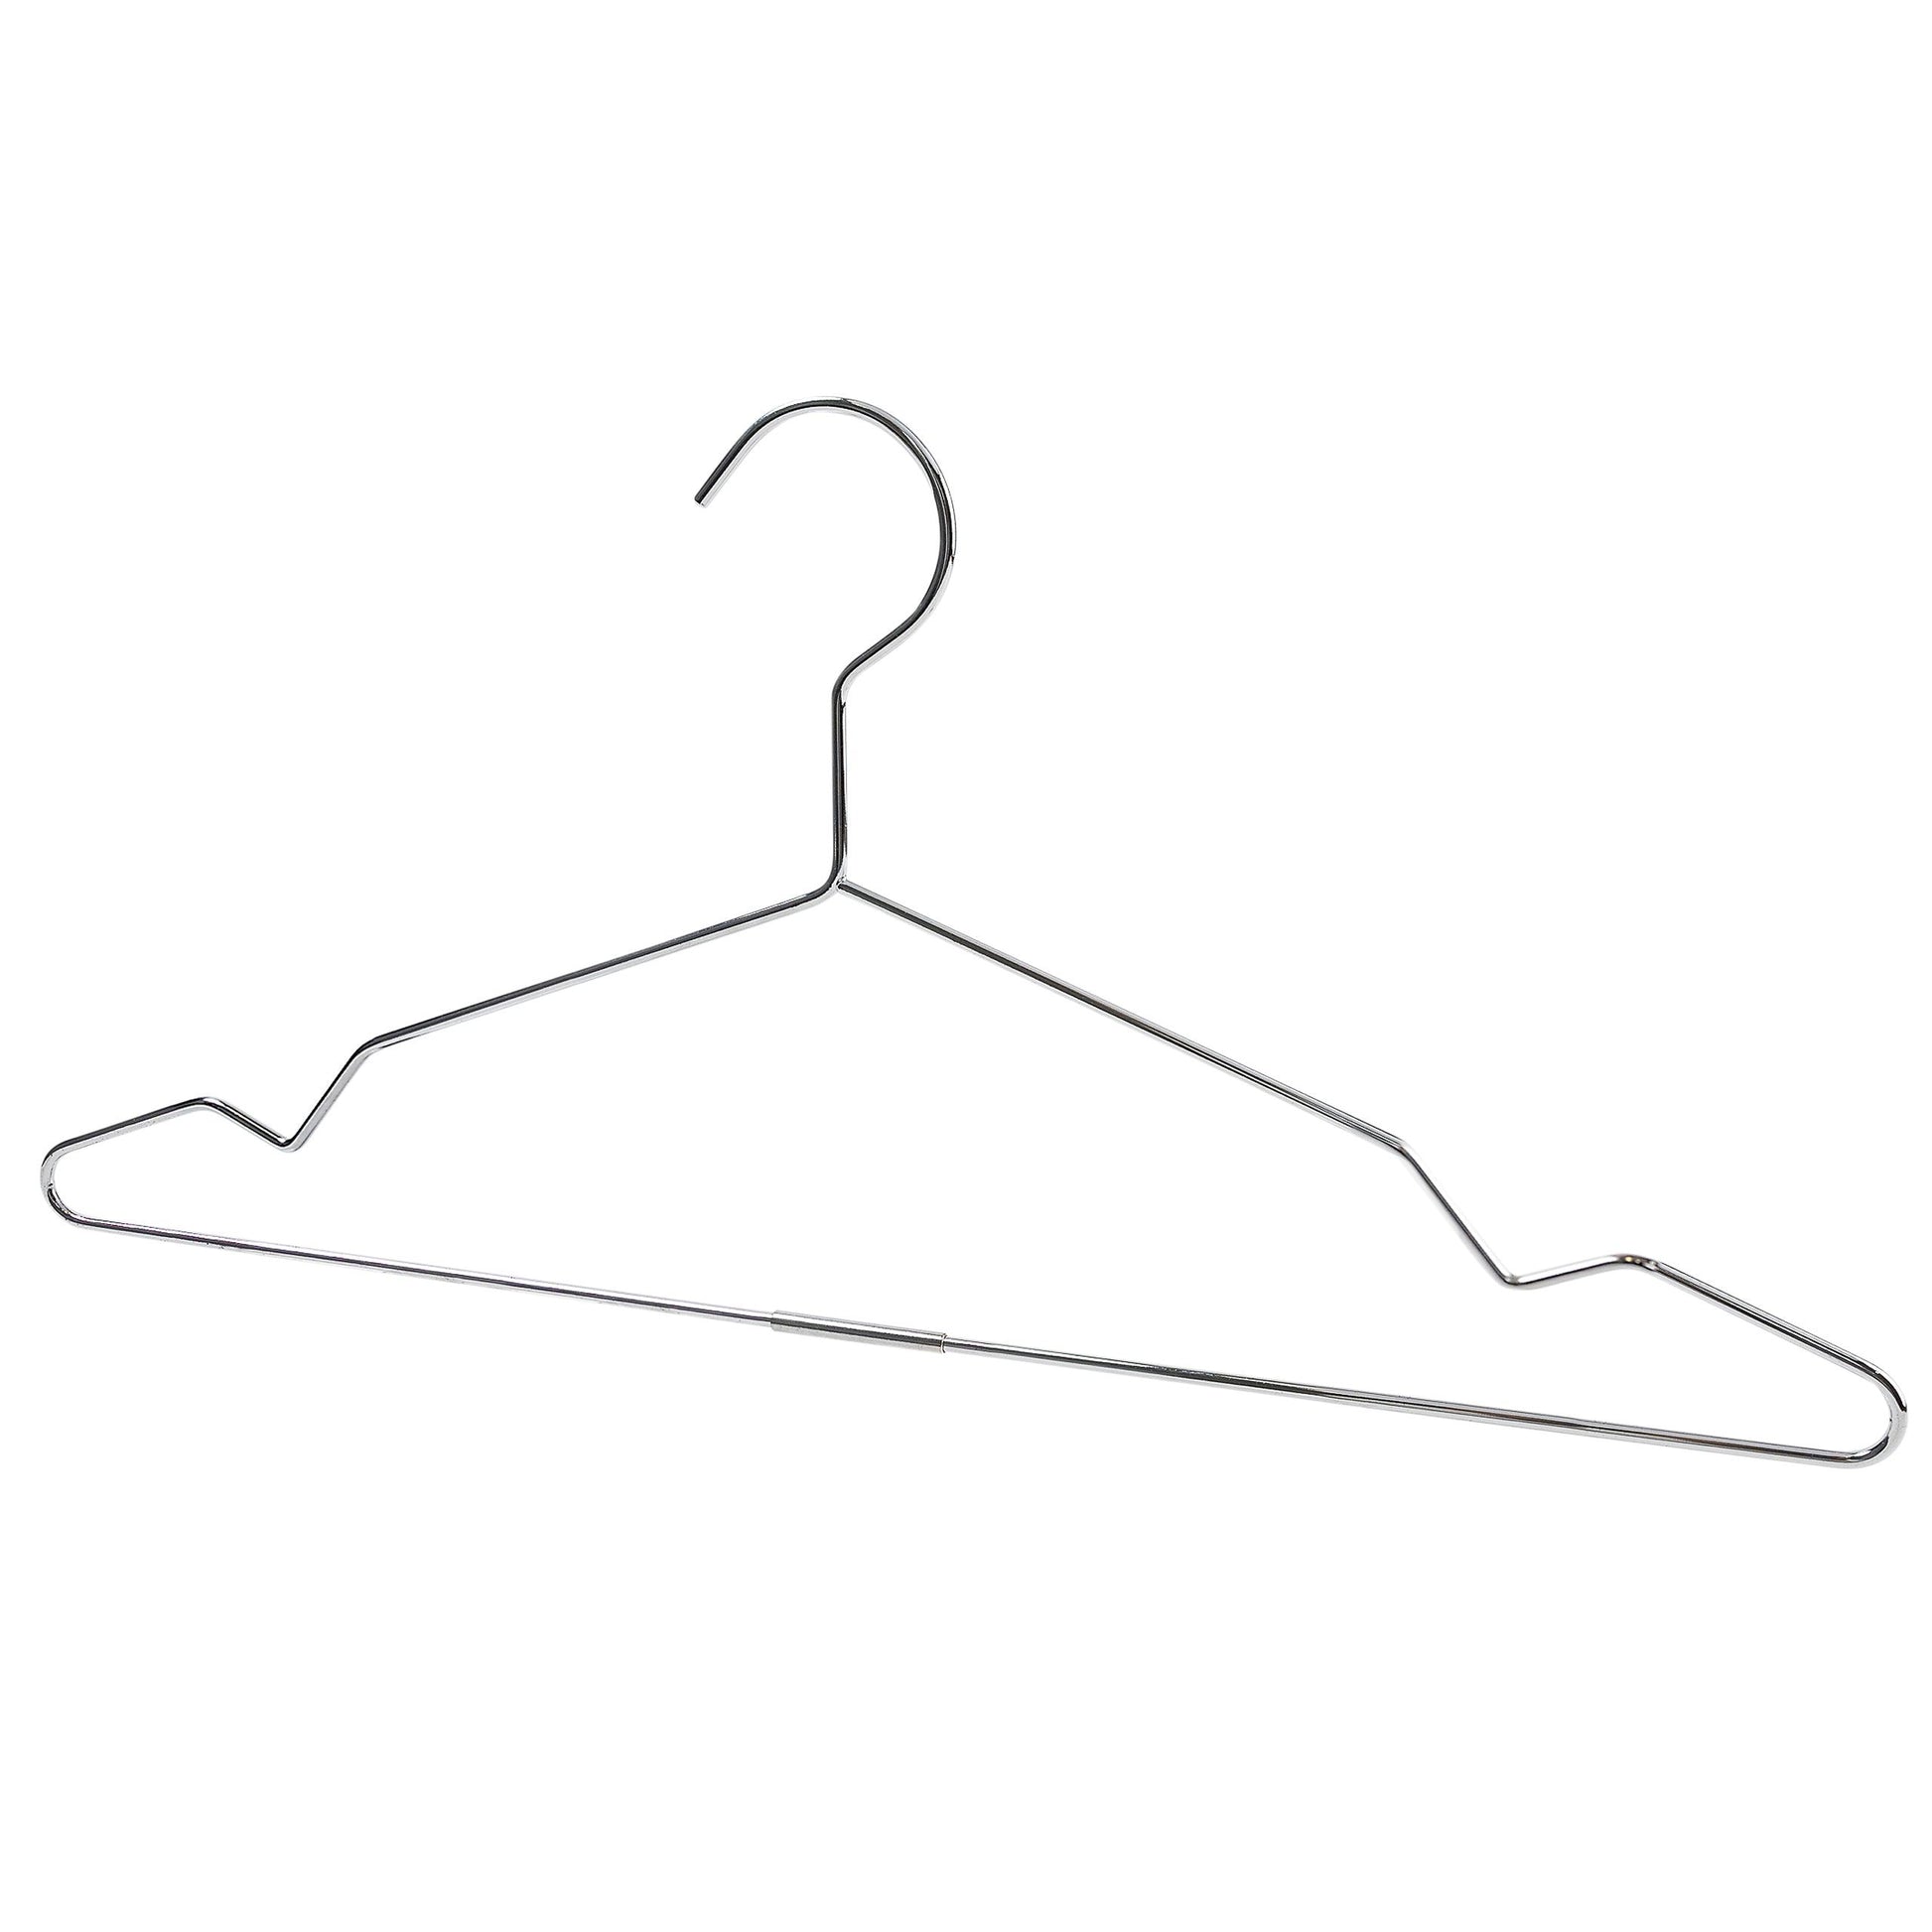 Metal Coat Hanger With Bar & Notches - 43CM X 3.5mm Thick - (Sold in Bundles of 25/50/100) - Hangersforless